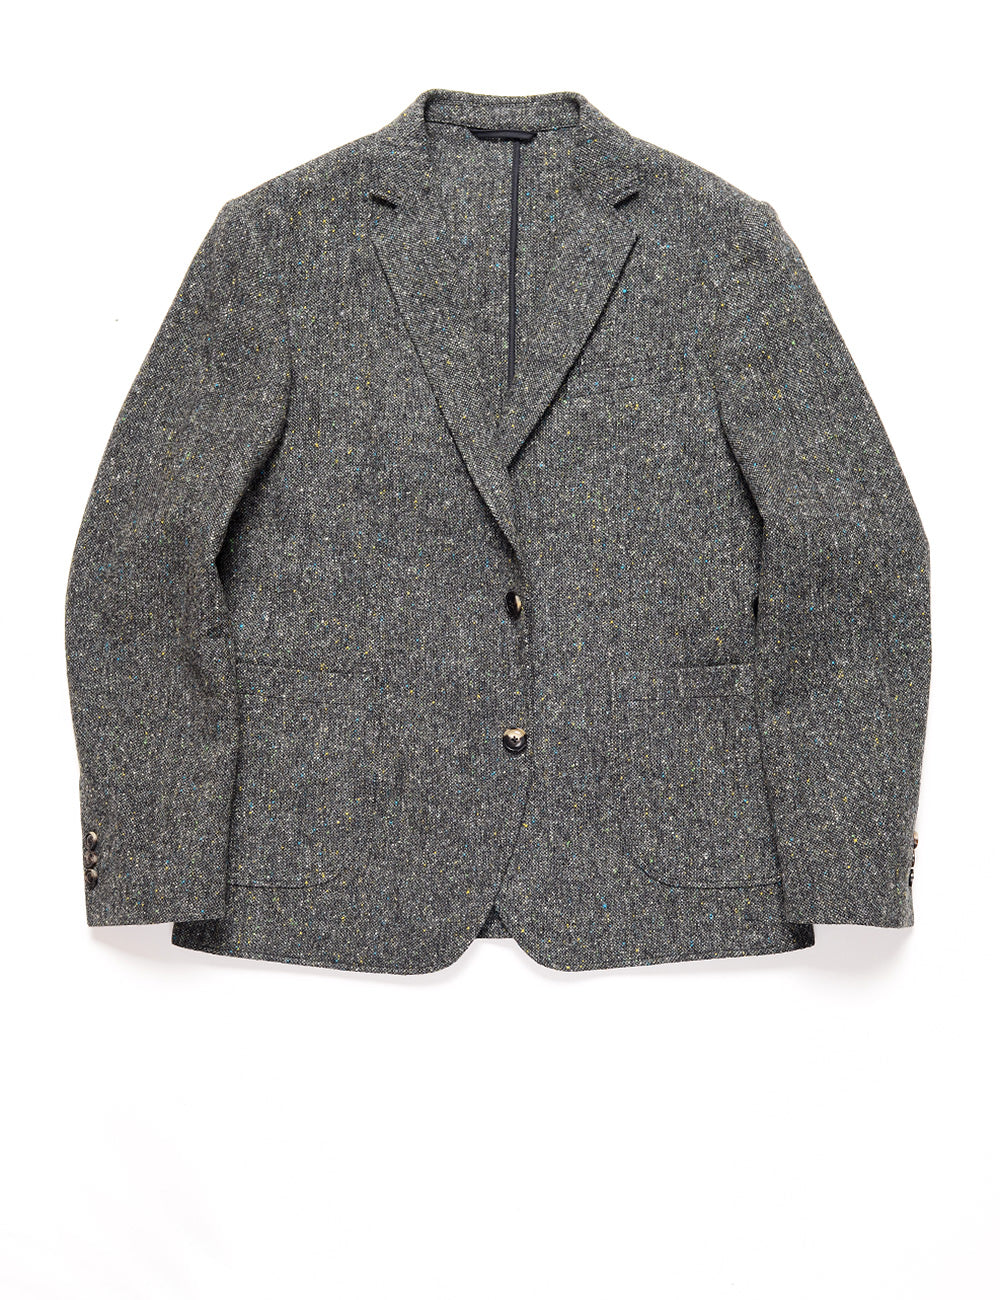 Irish 100% Donegal Tweed Shirt Jacket Grey Fleck 